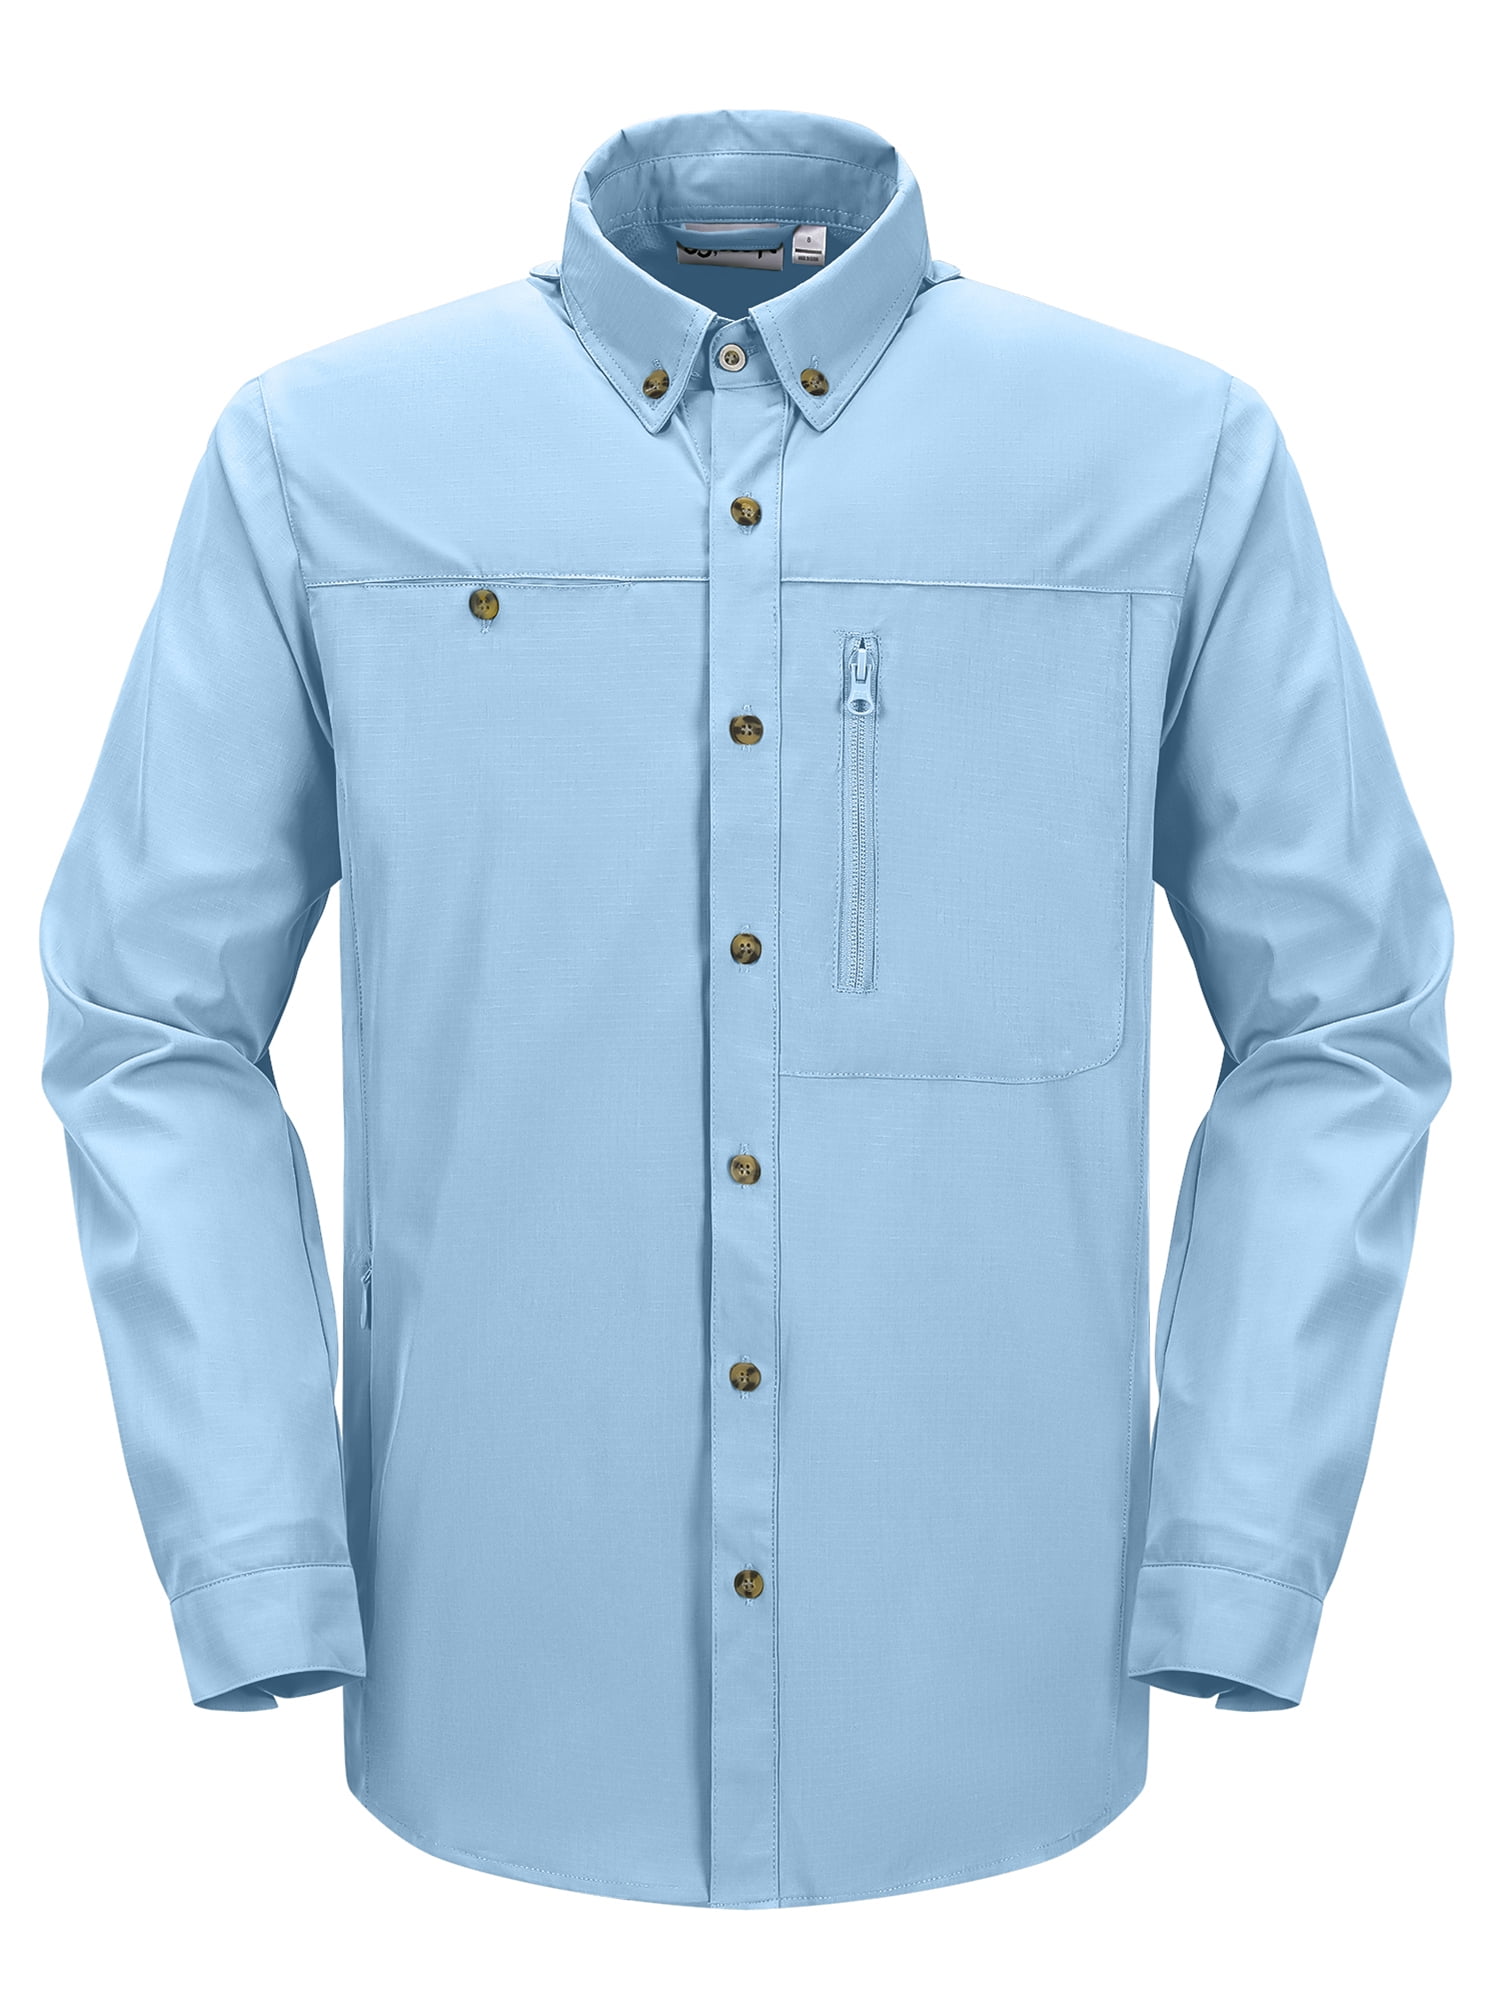 PELAGIC Fishing shirt Men's Long Sleeve Performance Shirt UPF 50+ Uv  Protection Quick Dry Tops Thin Breathable Outdoor Shirts